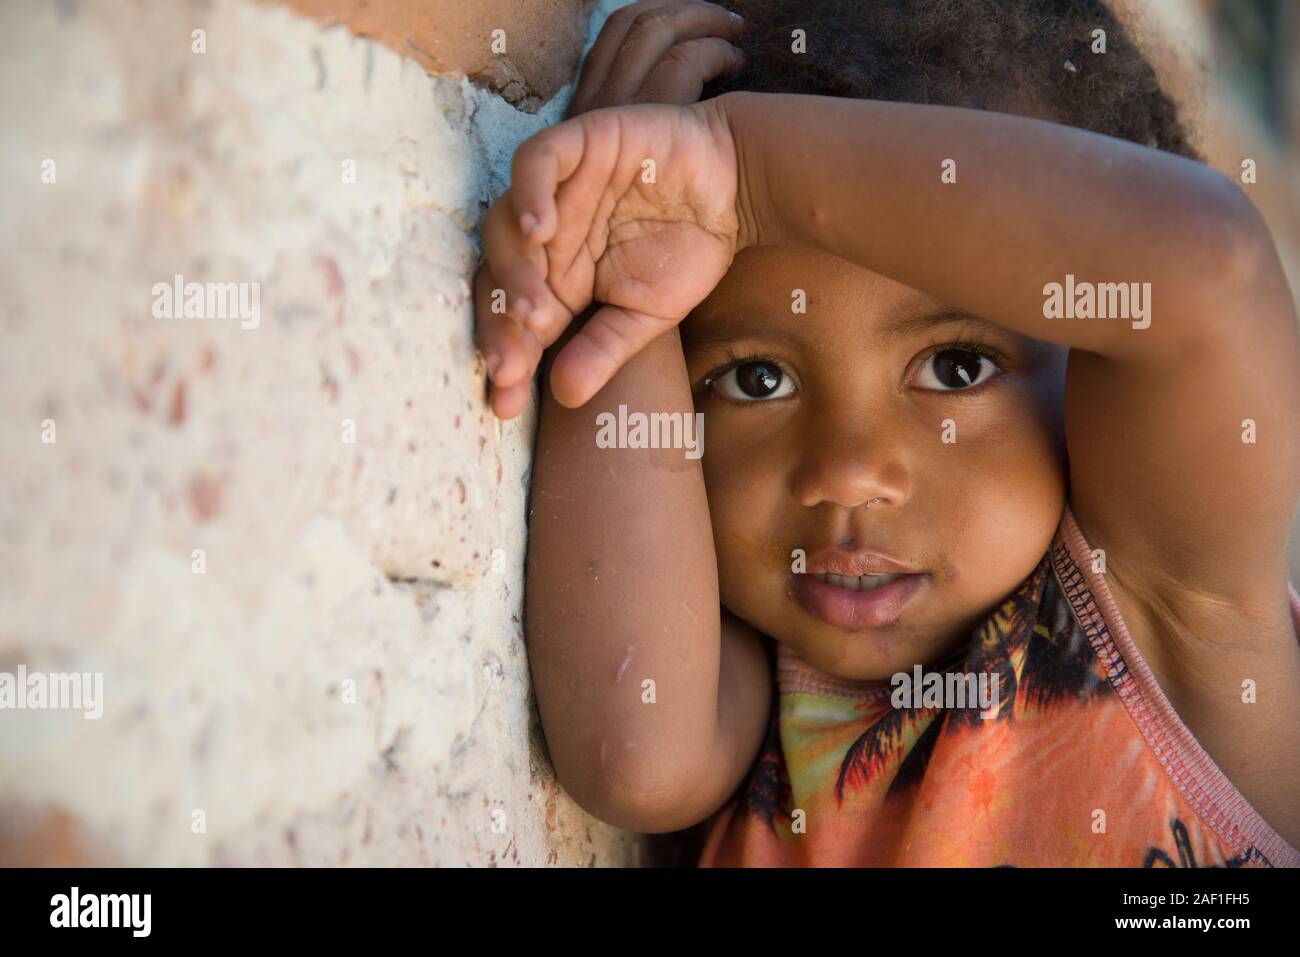 Natividade, Tocantins, Brazil - May 11, 2016: Cute little girl from Quilombo Chapada da Natividade, central Brazil Stock Photo